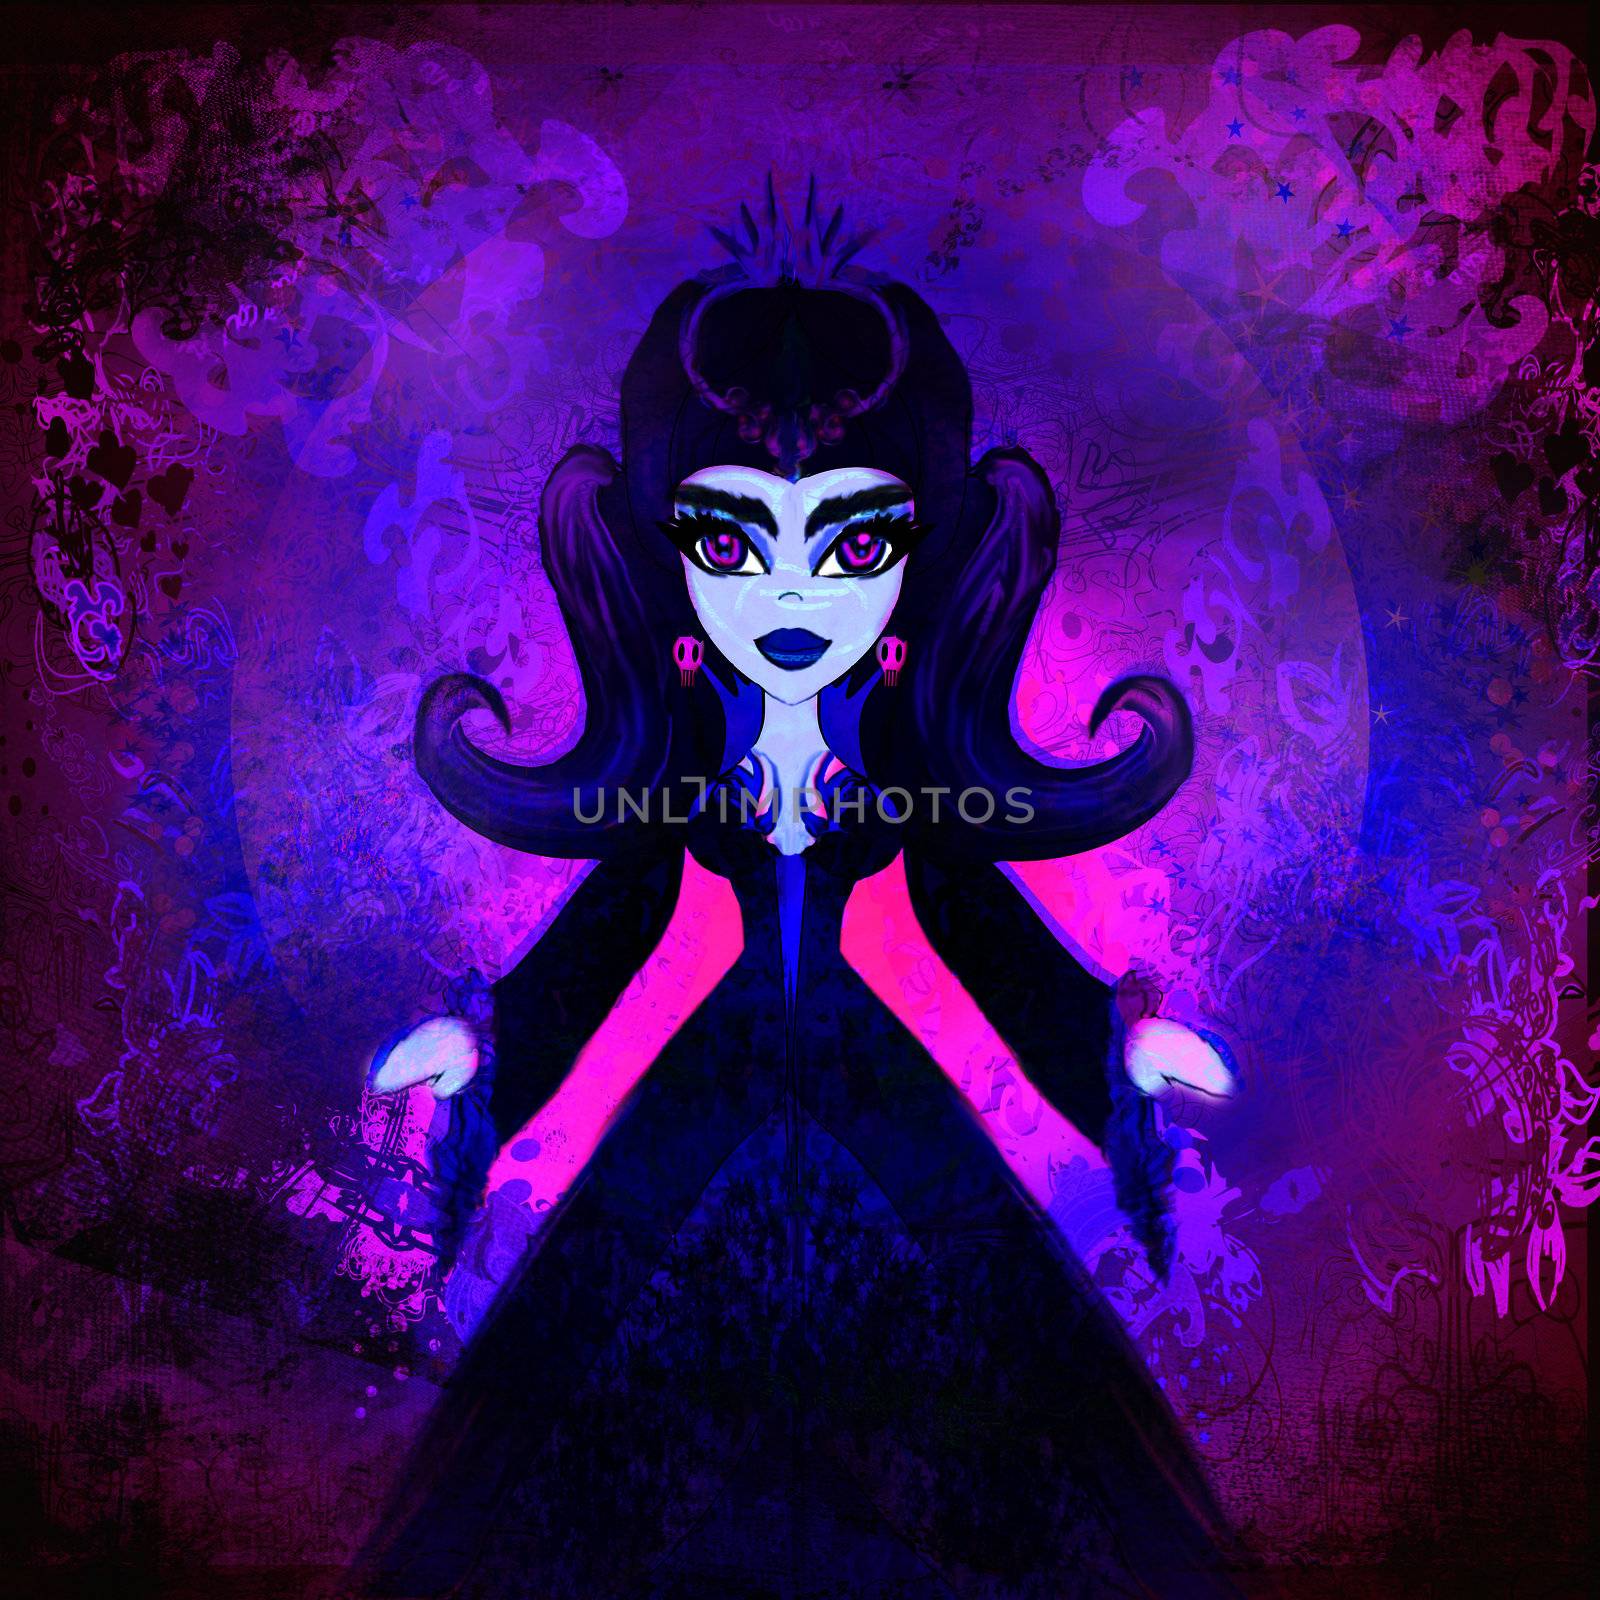 Grand dark Witch. raster version by JackyBrown